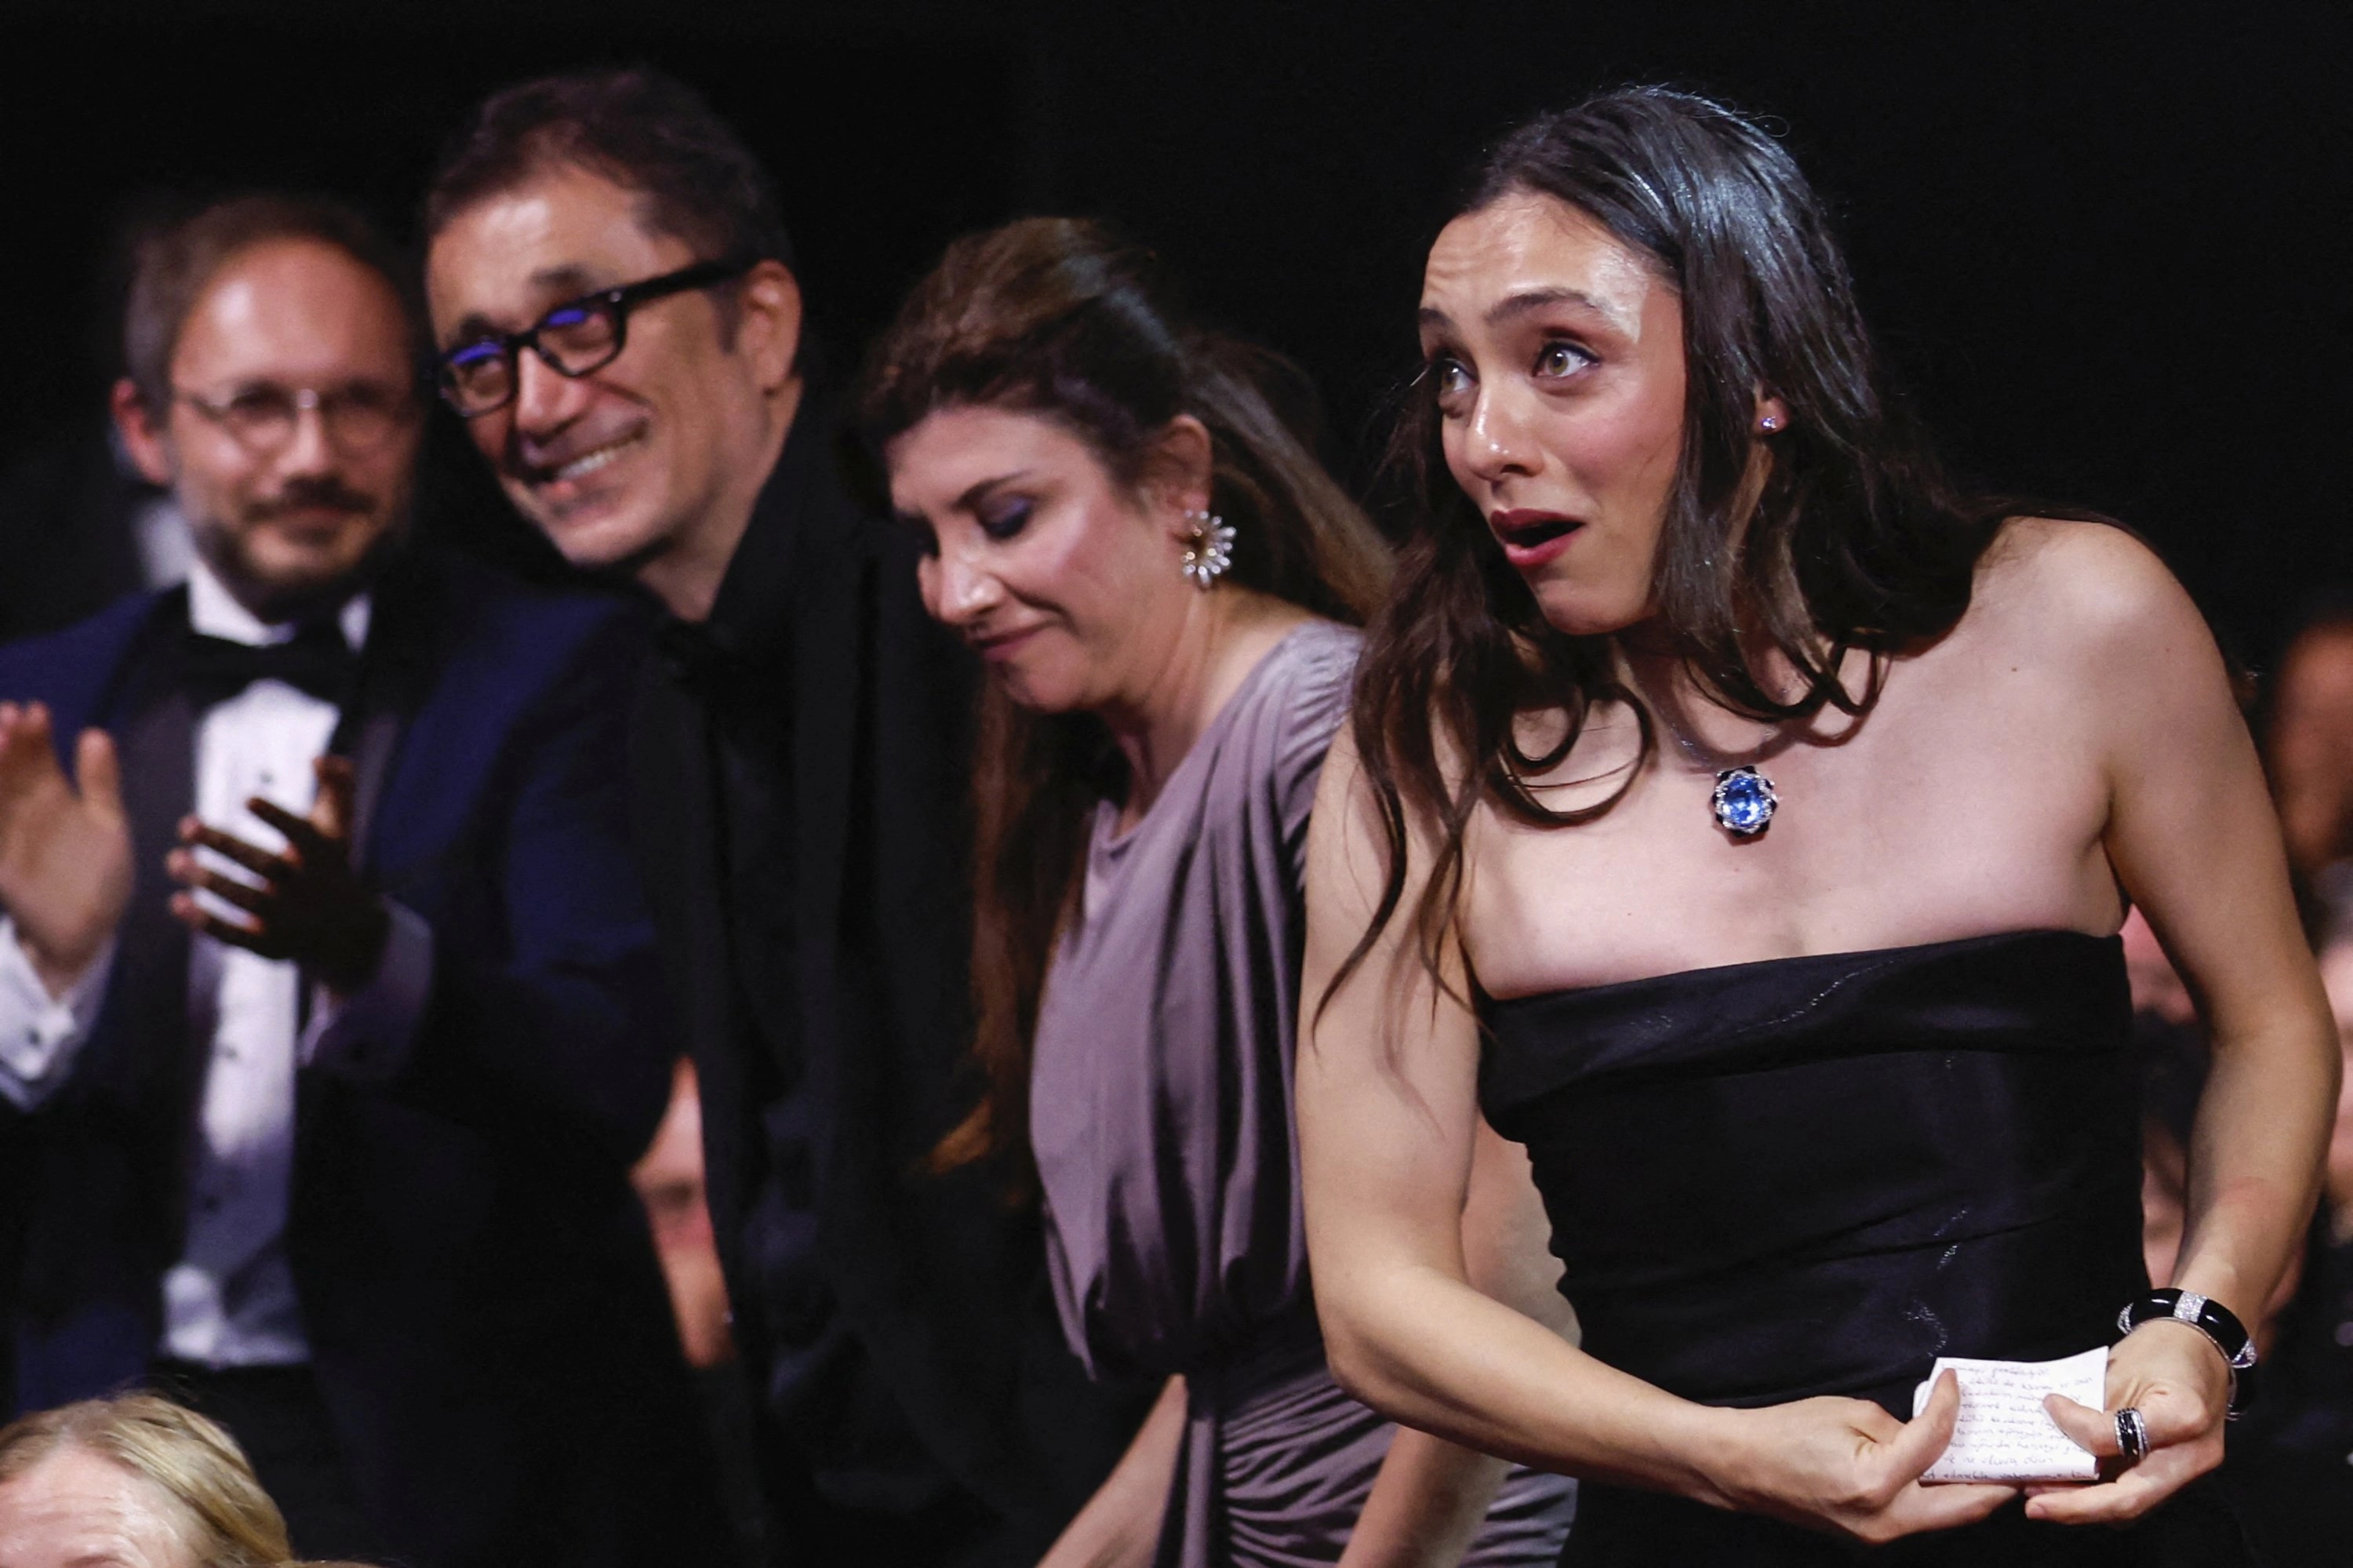 Merve Dizdar wins award at Cannes Film Festival